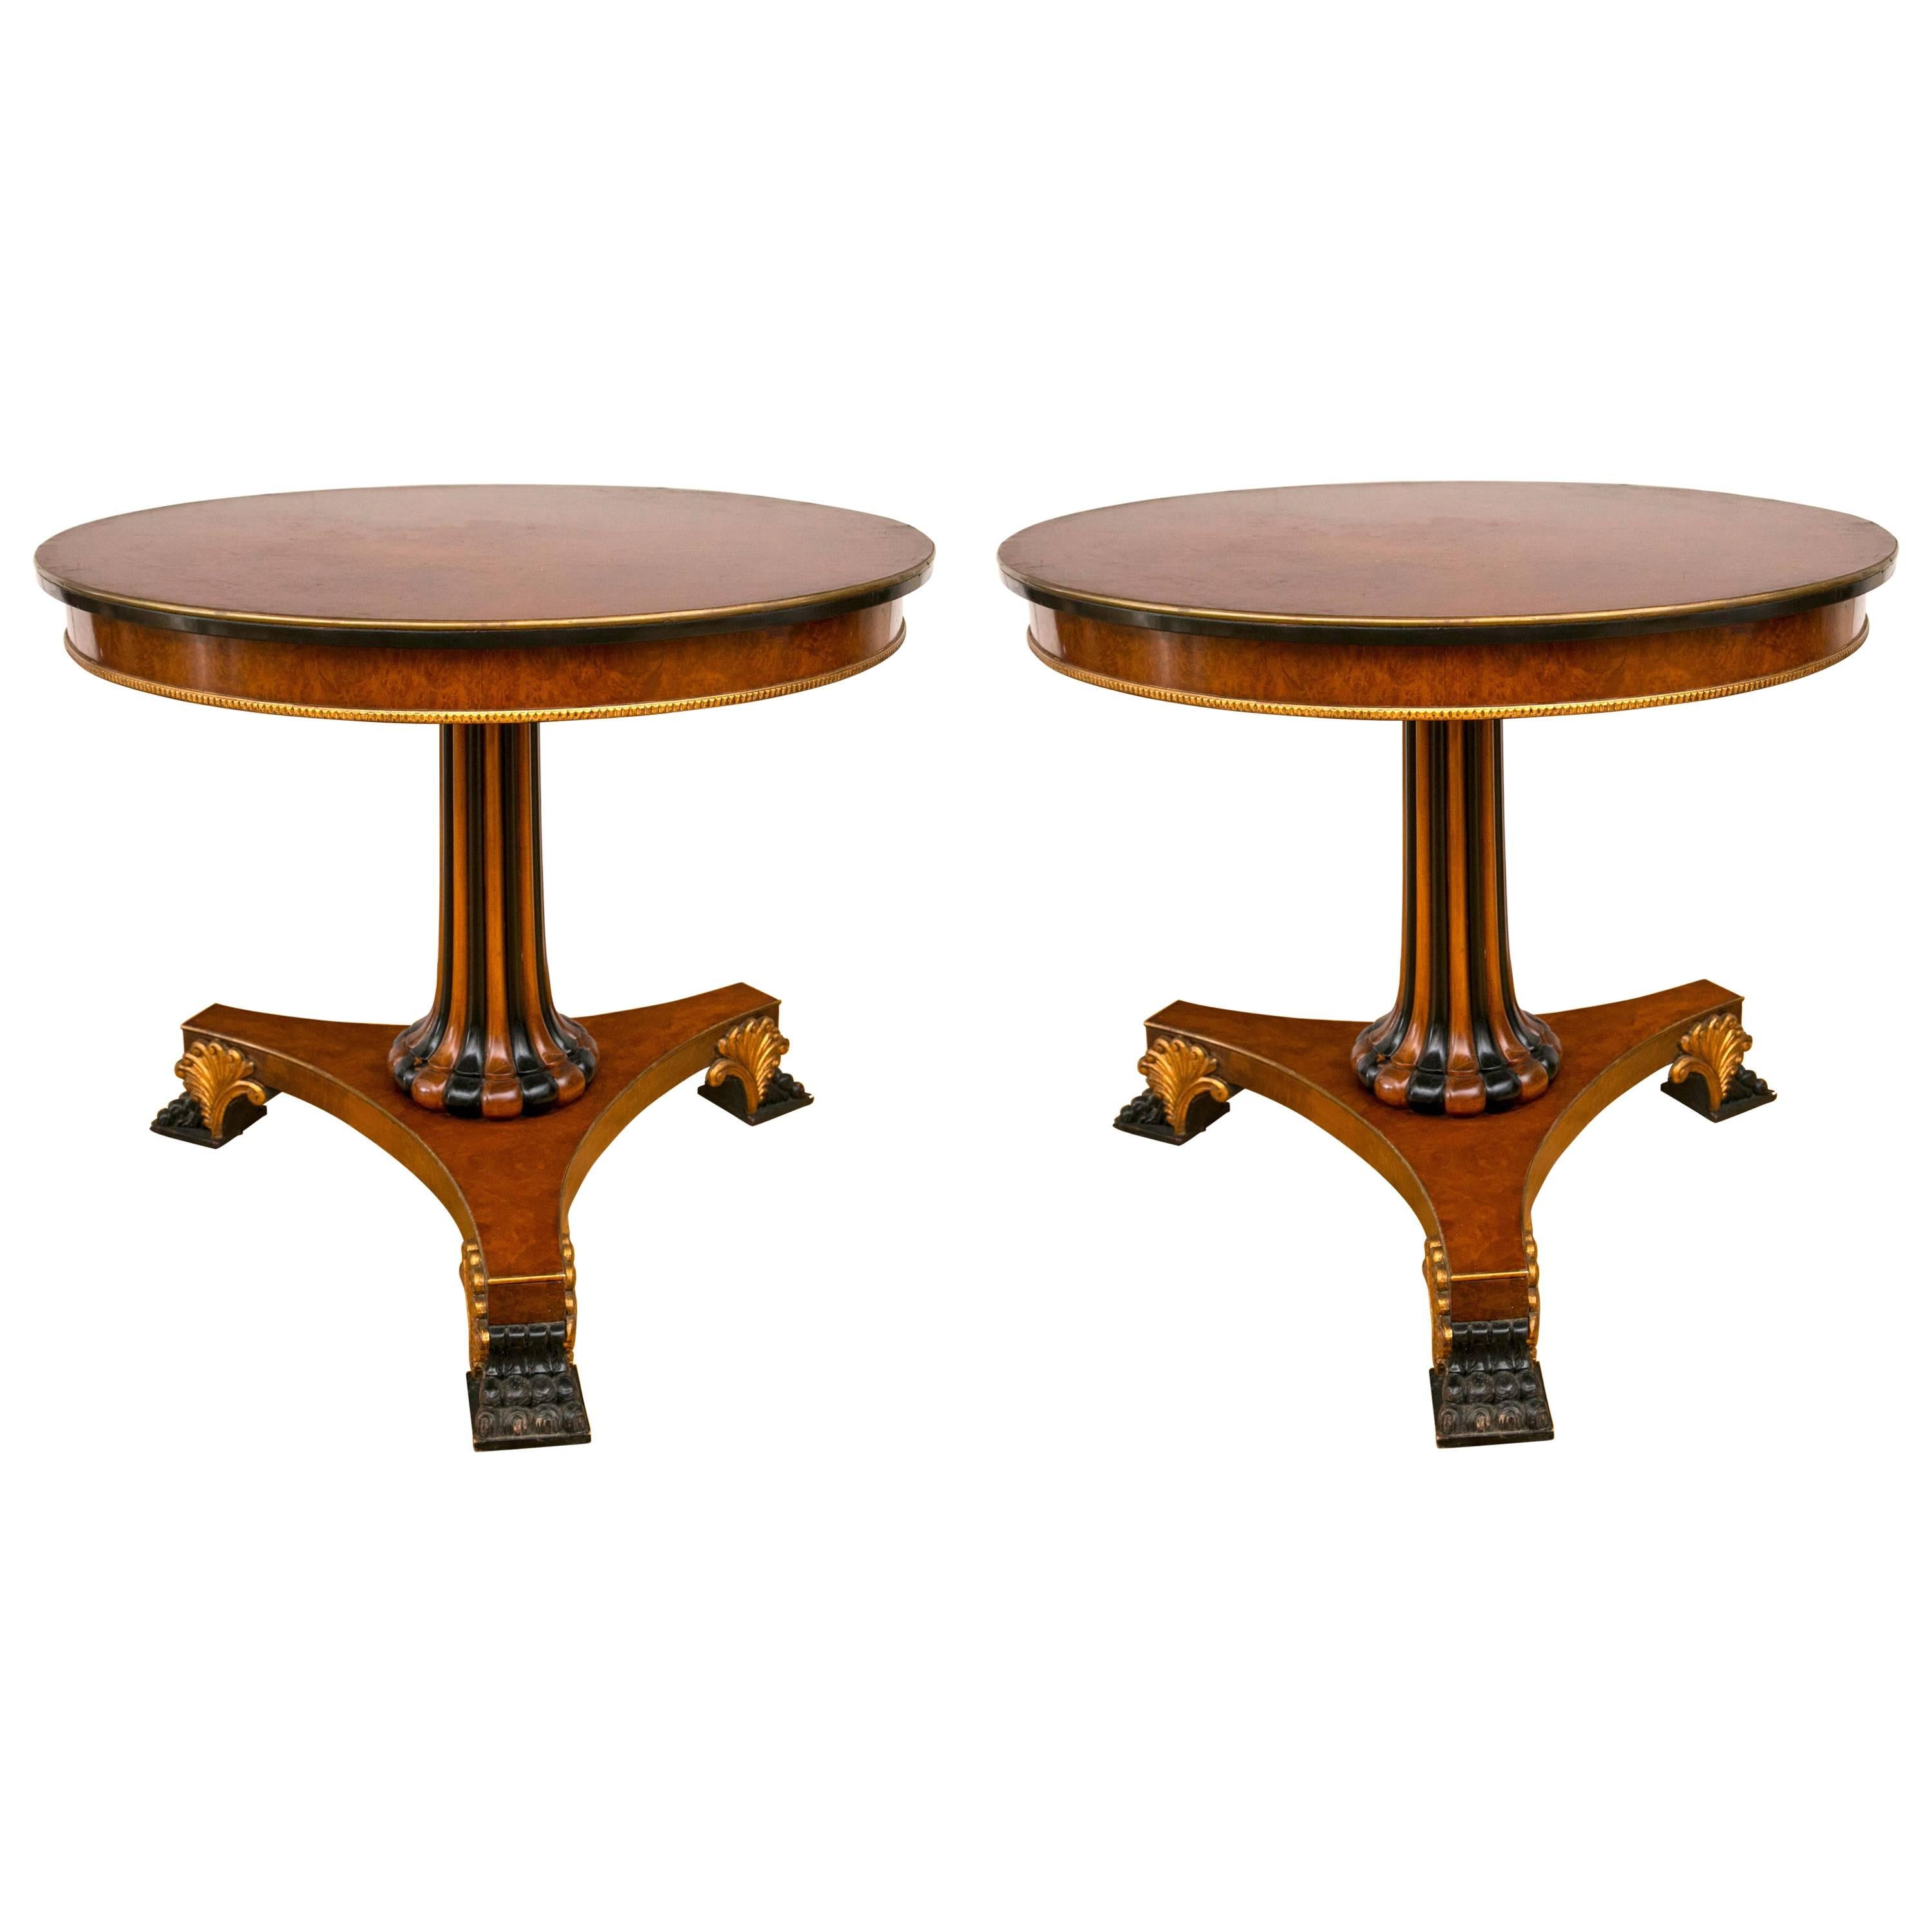 Pair of Regency Style Parcel Gilt and Ebonized Pedestal Tables